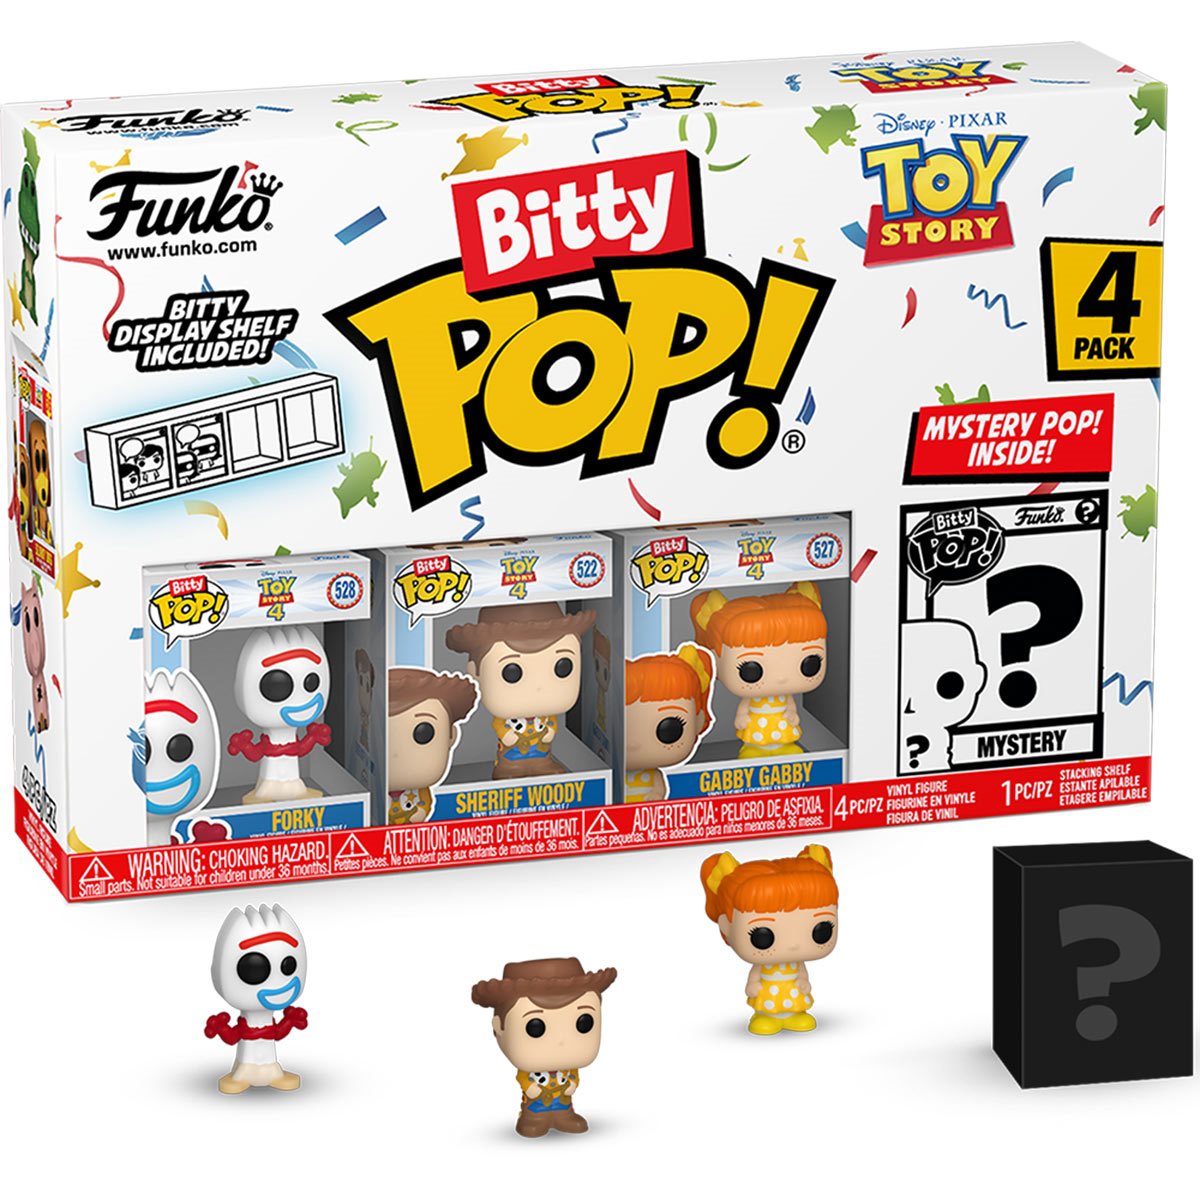 Funko Bitty Pop: Disney Toy Story - Forky 4 Pack